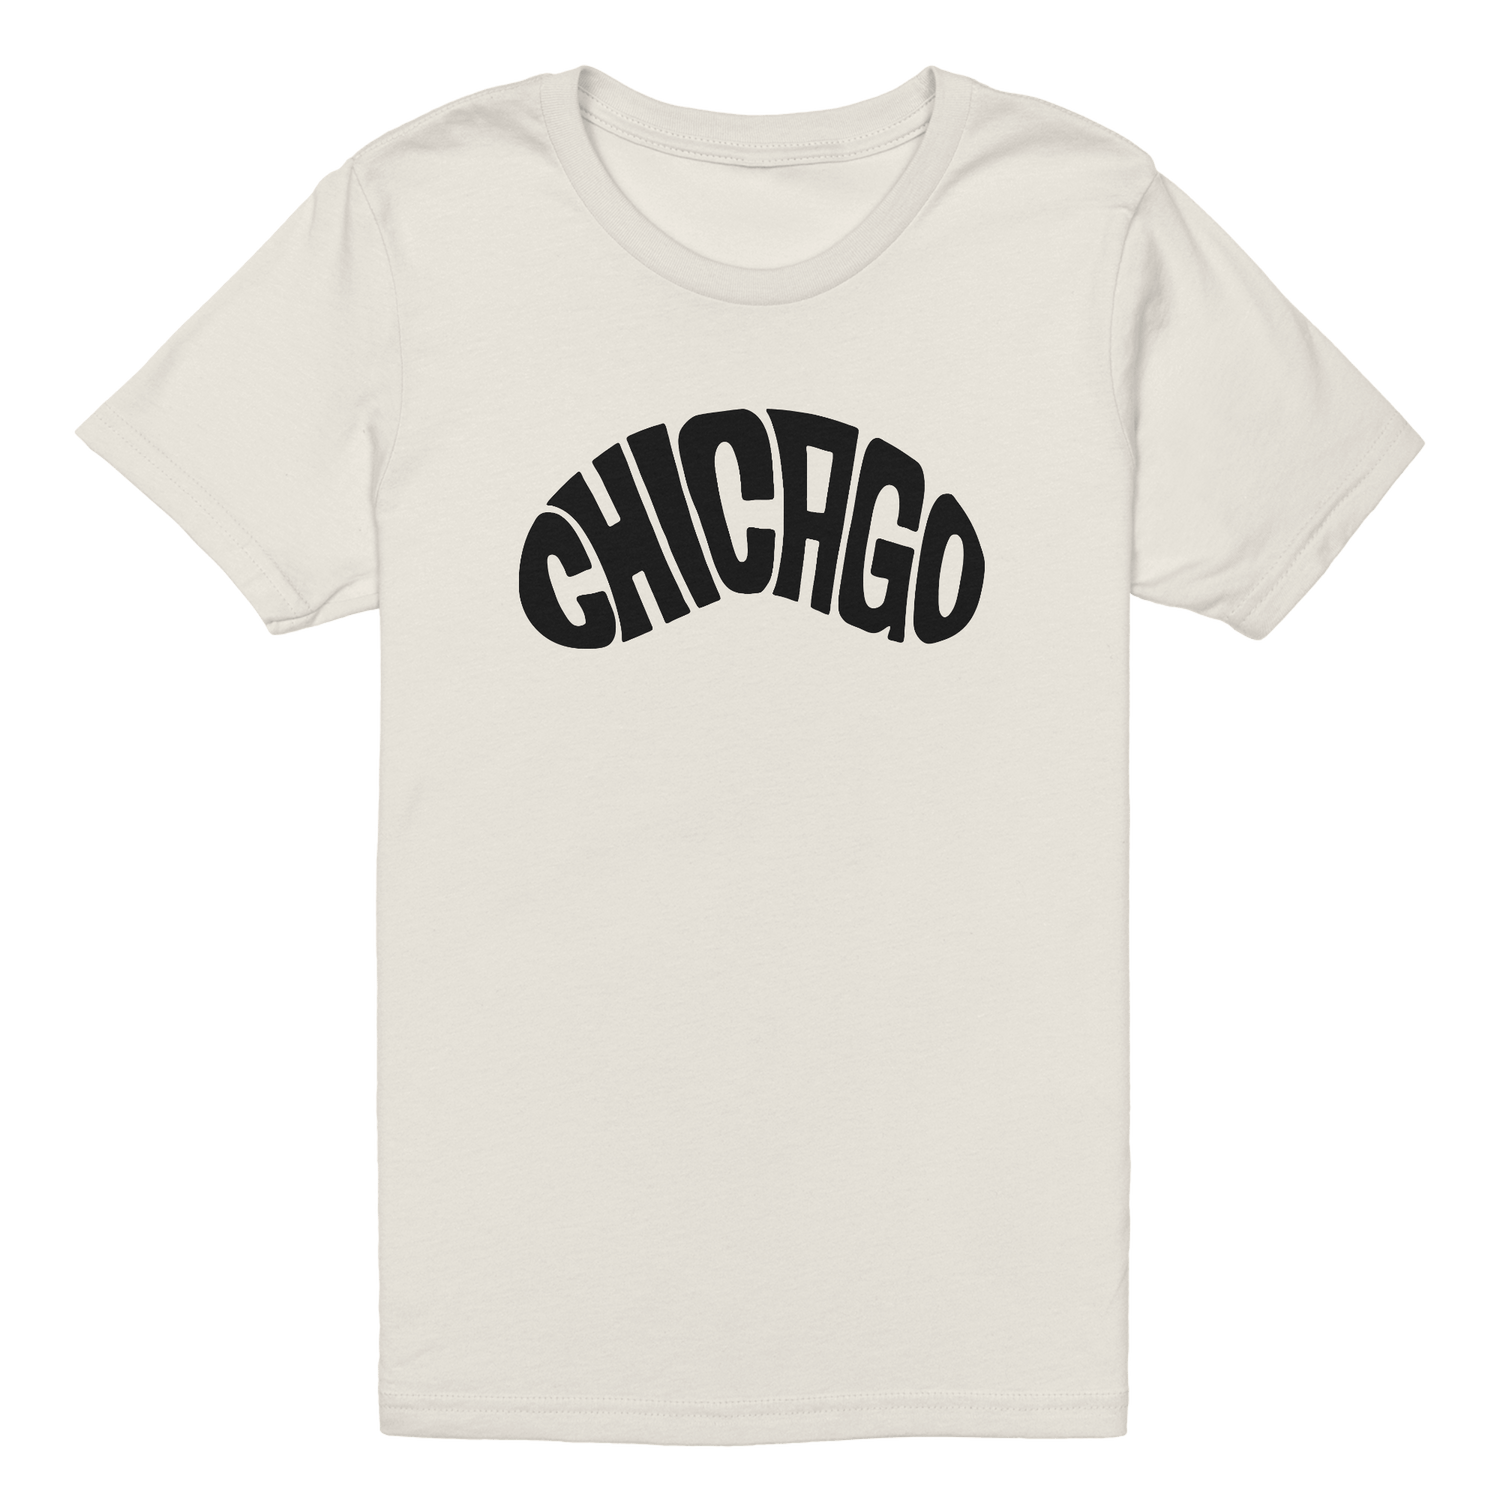 The T-Shirt Deli, Co. Chicago Bean T